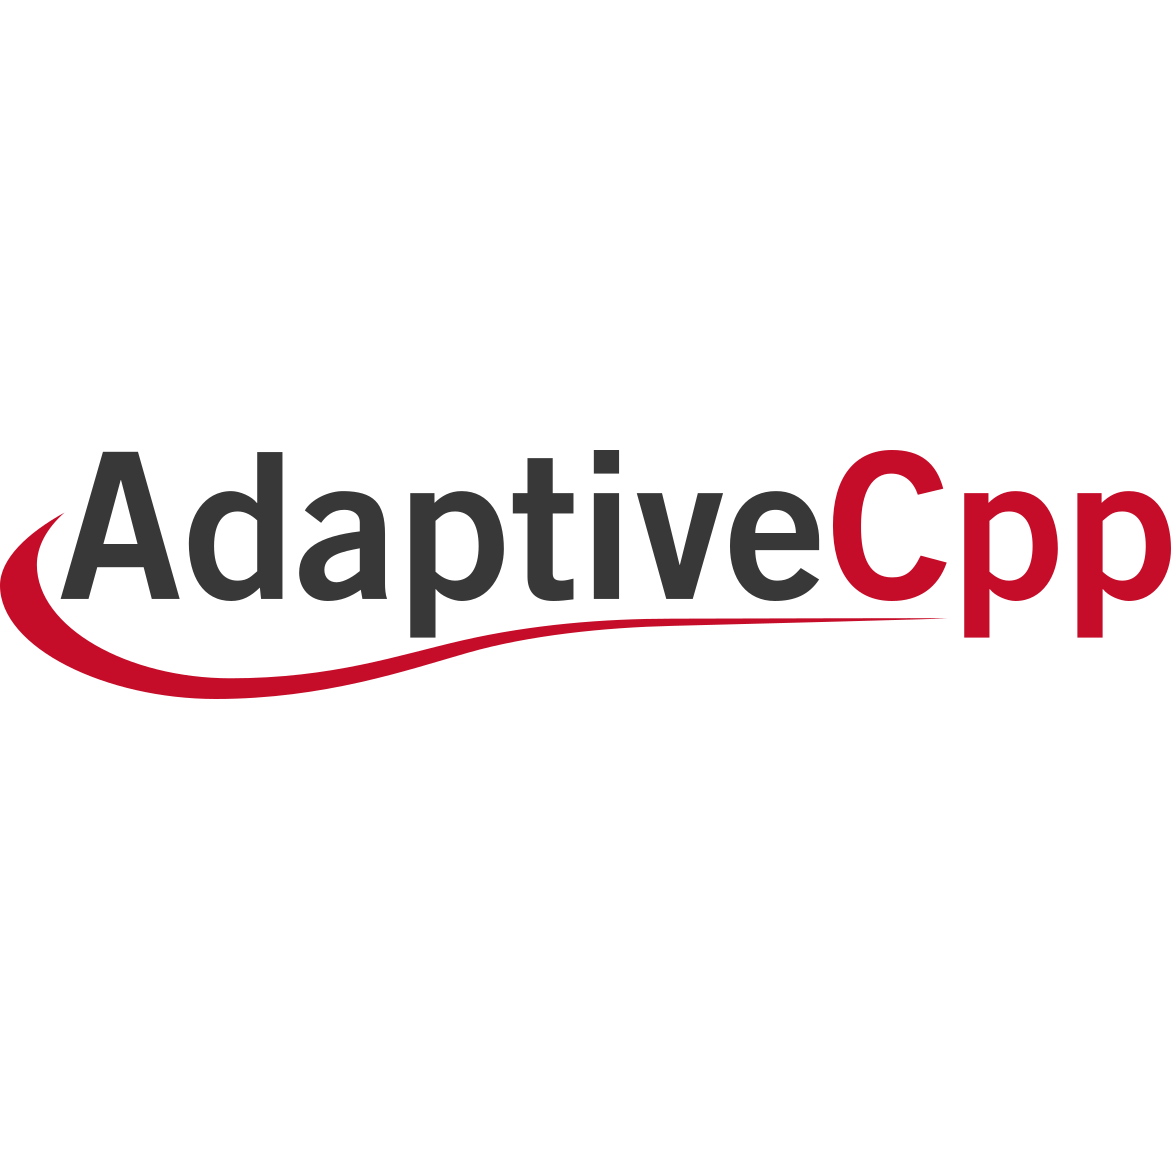 AdaptiveCpp